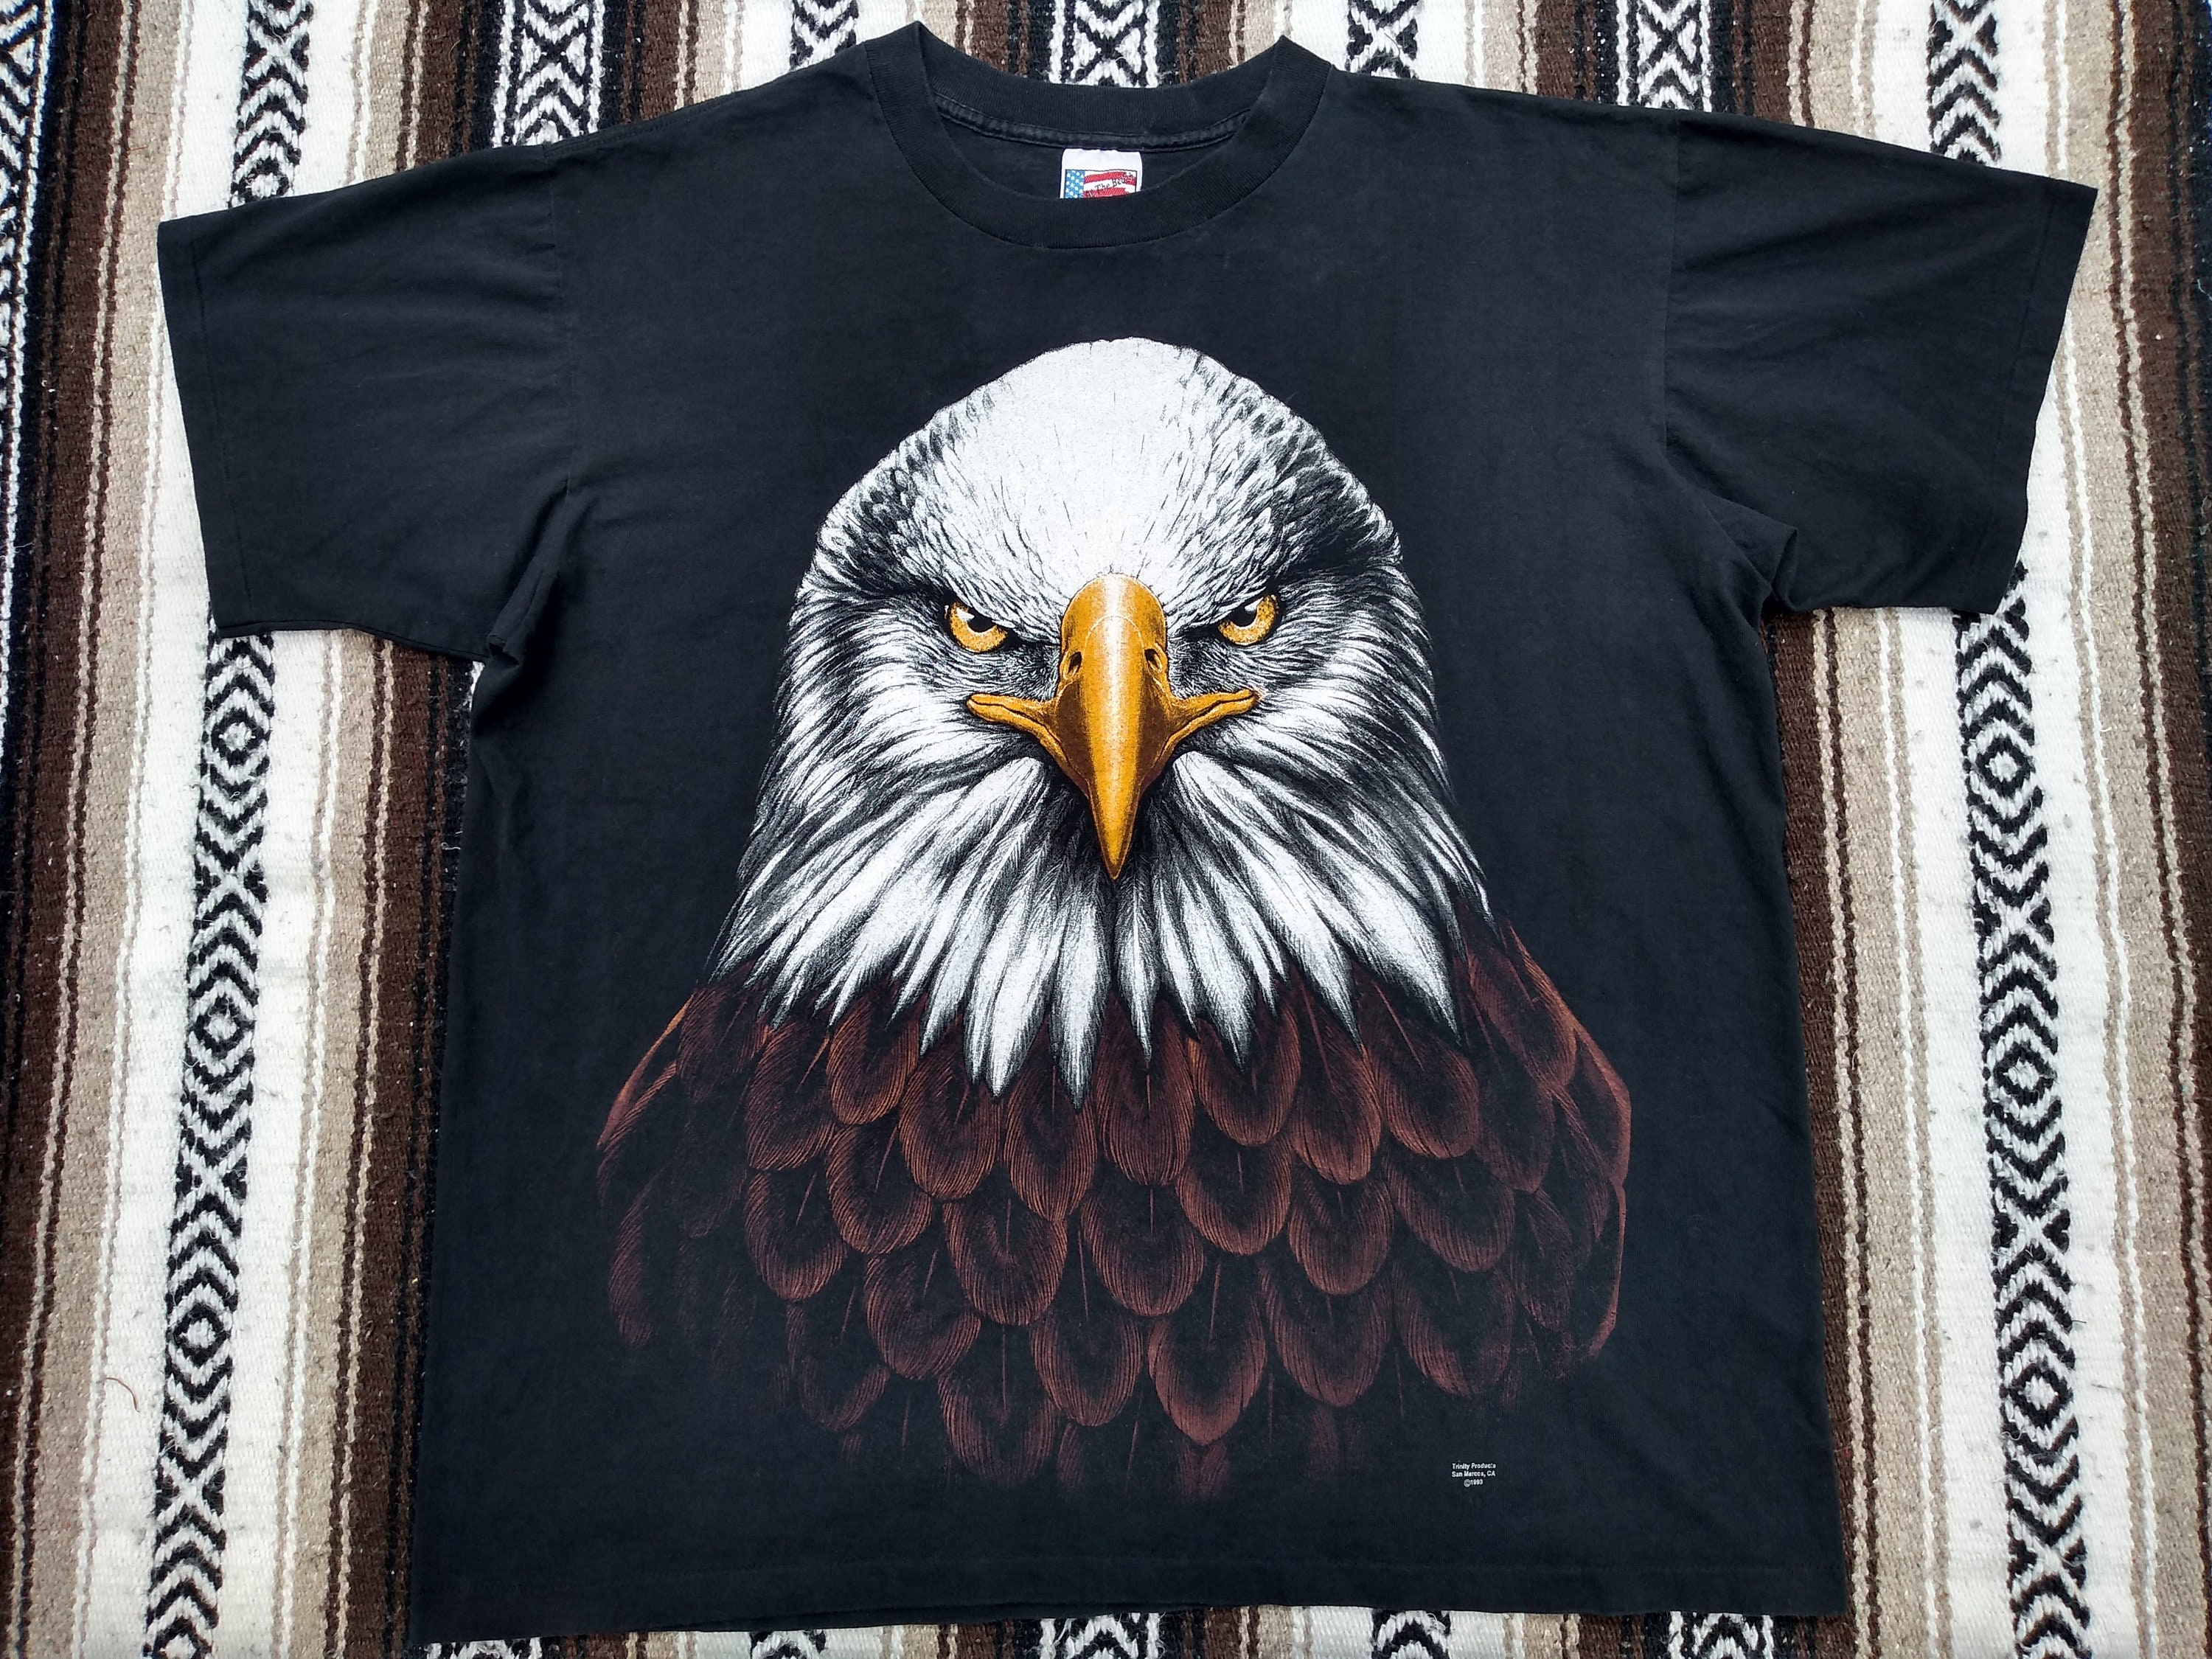 Made in Idaho Vintage Eagle T-shirt